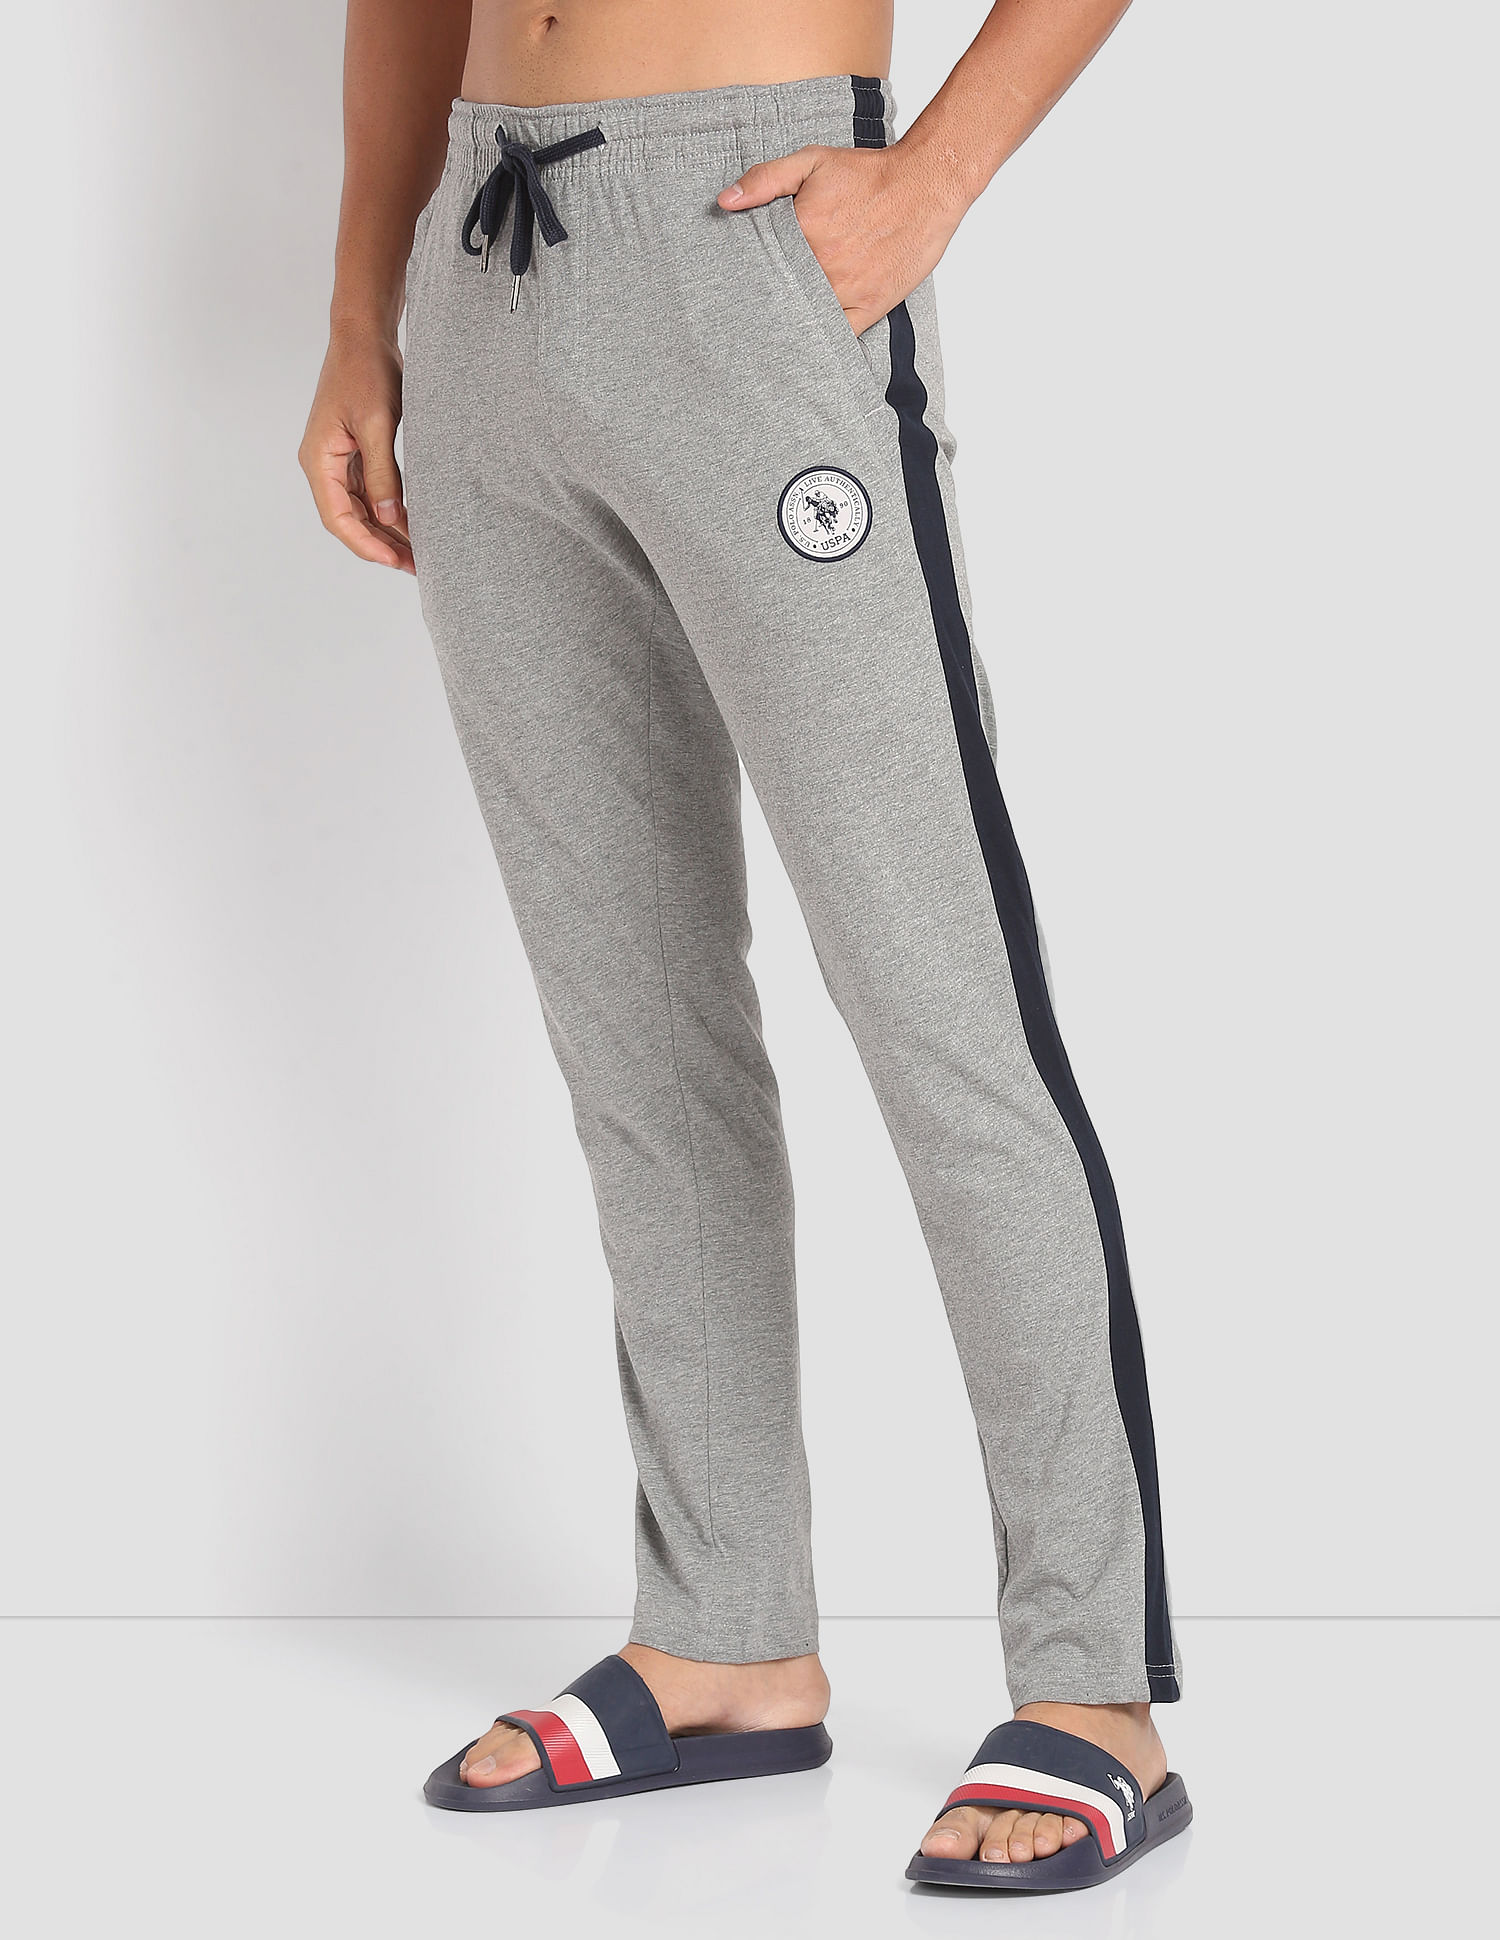 U.S. POLO ASSN. Sweatpants LIGHTWEIGHT joggers grey track pants Navy  stripes L